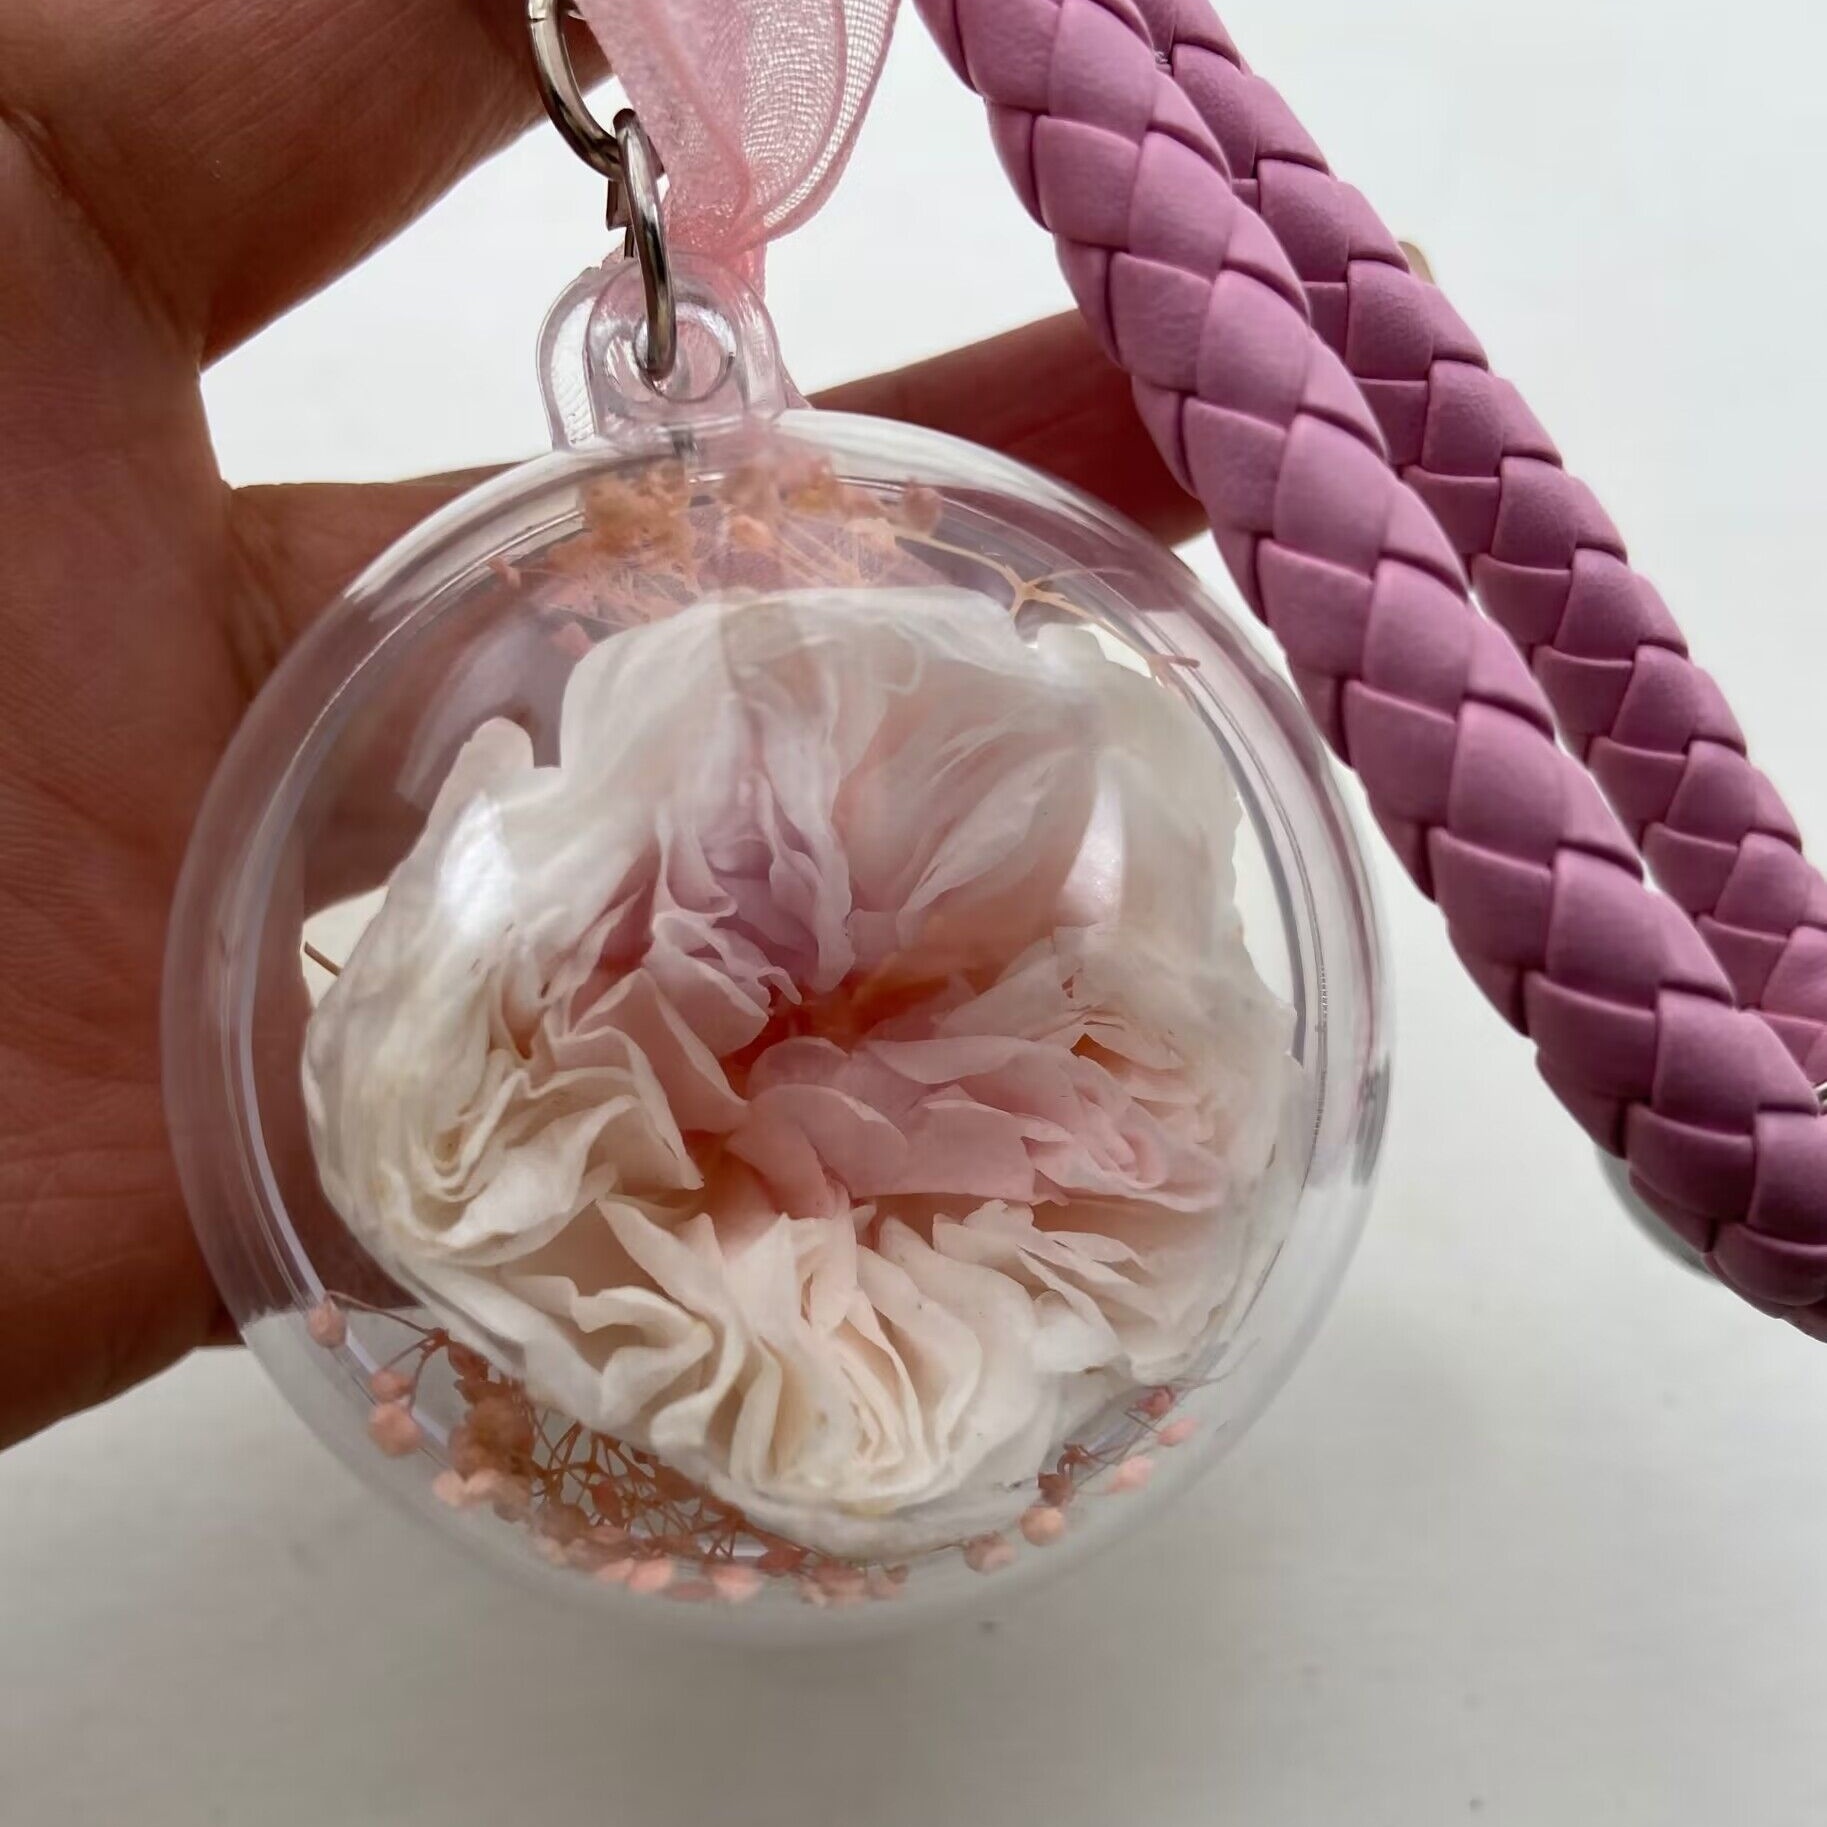 Pink Flower Decor Chain Bracelet